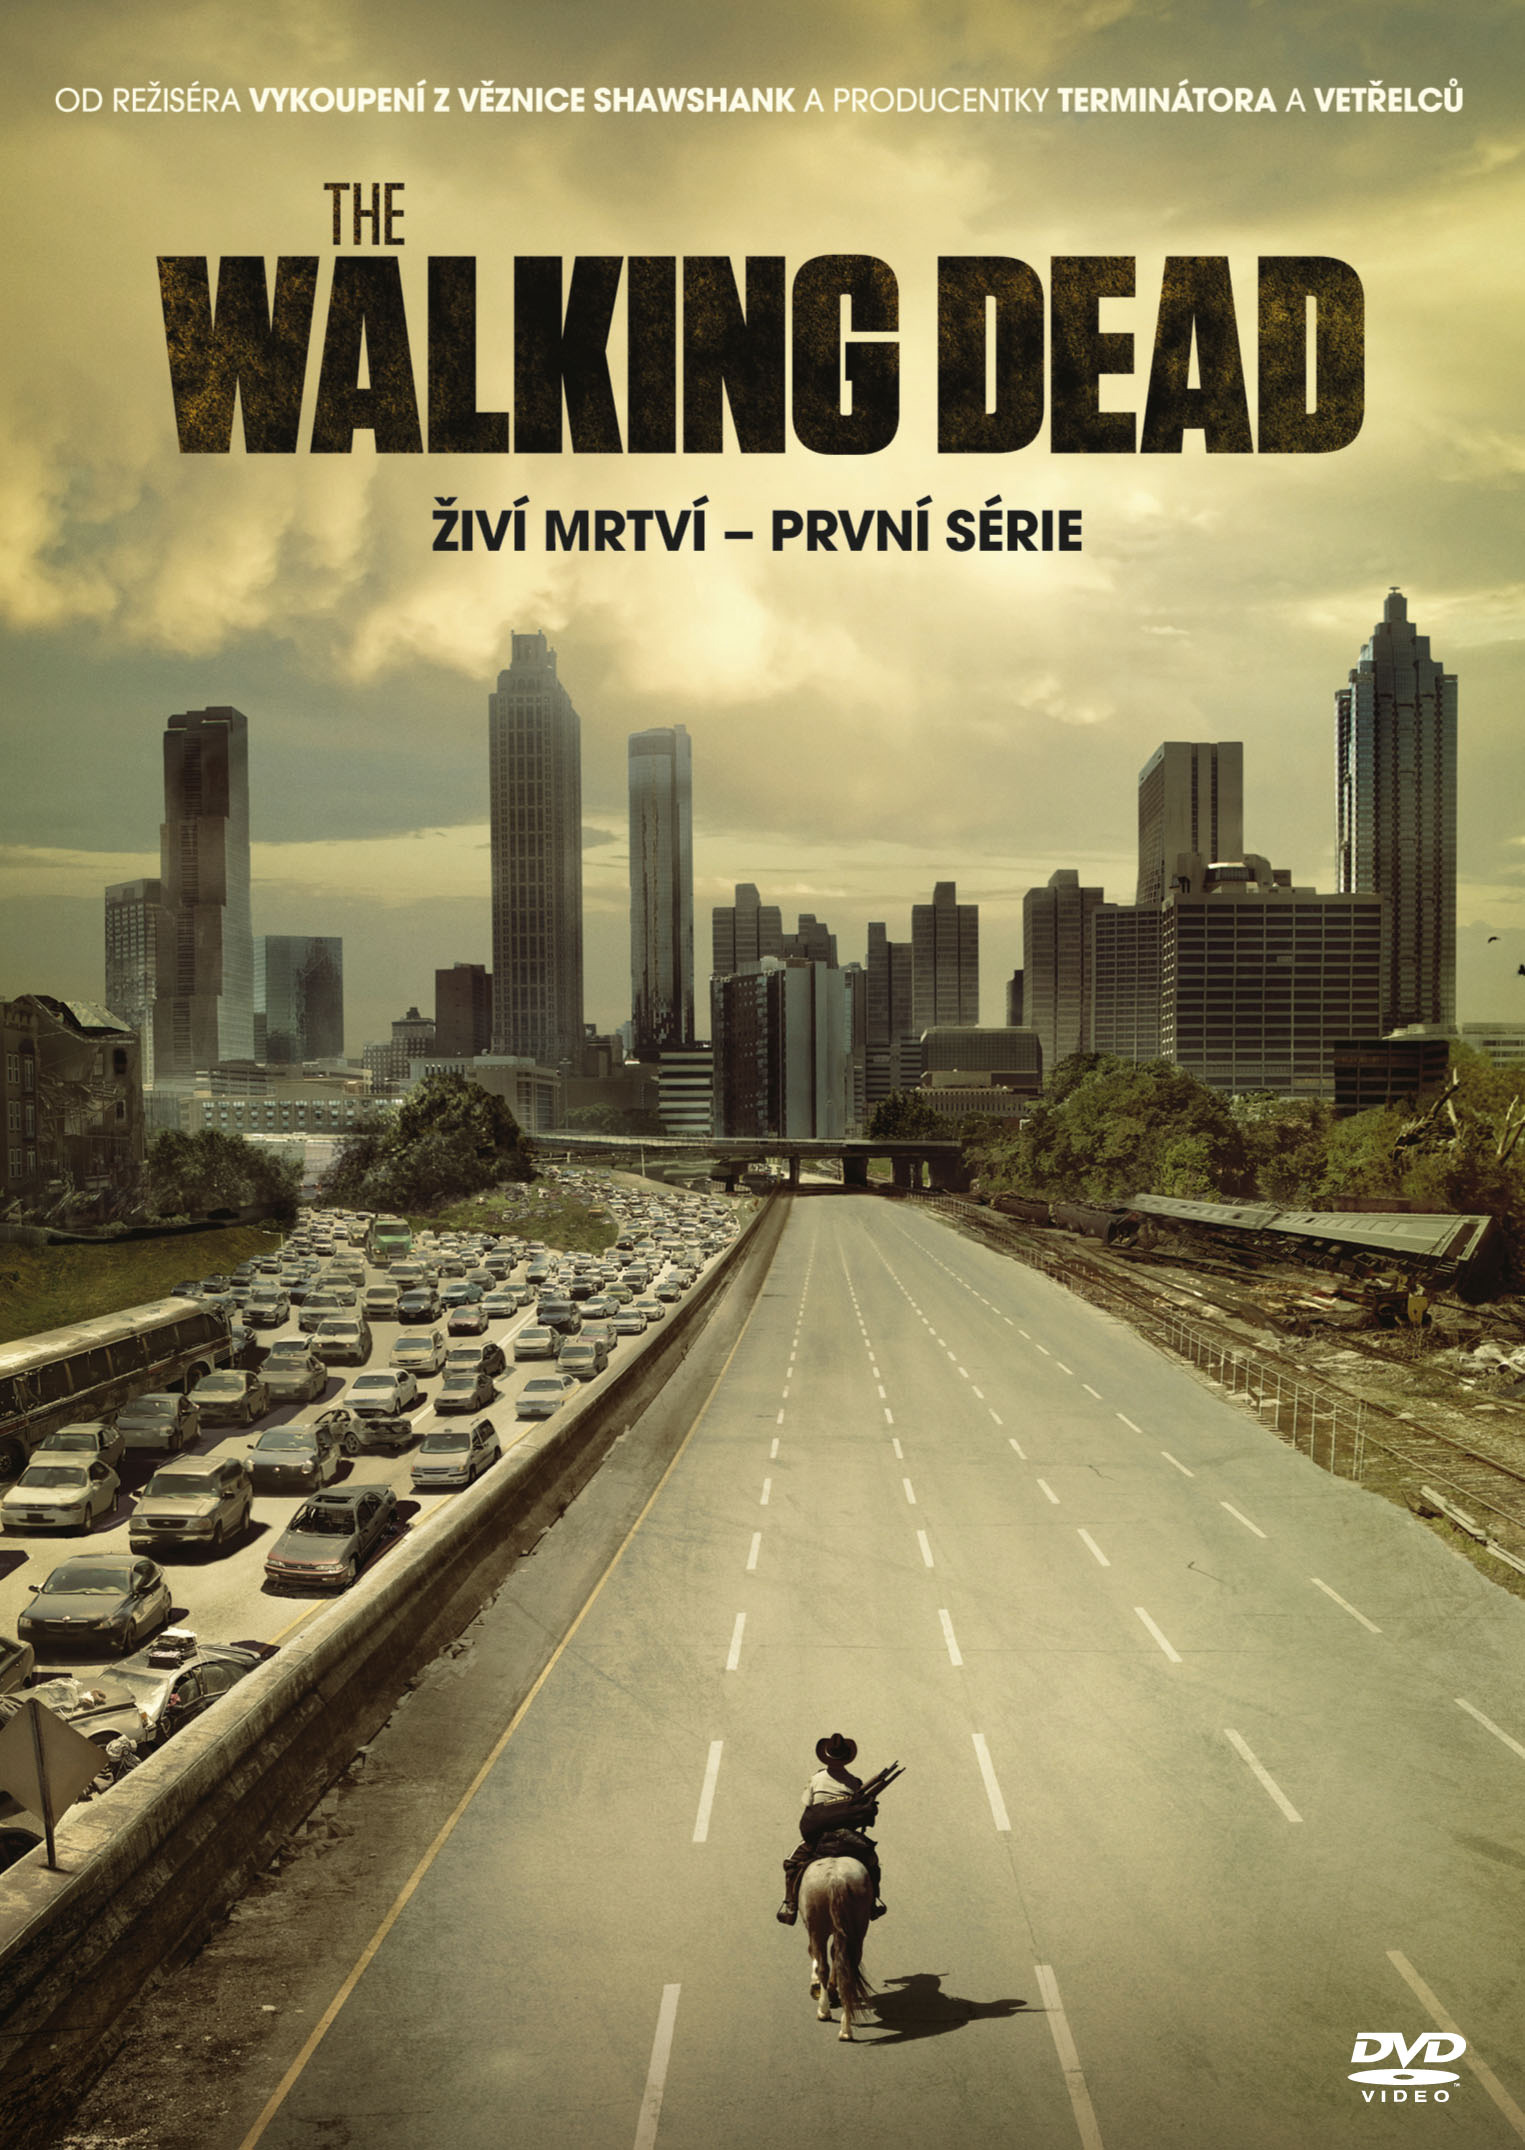 Stiahni si Seriál Zivi mrtvi / The Walking Dead - 1. serie (CZ) = CSFD 80%